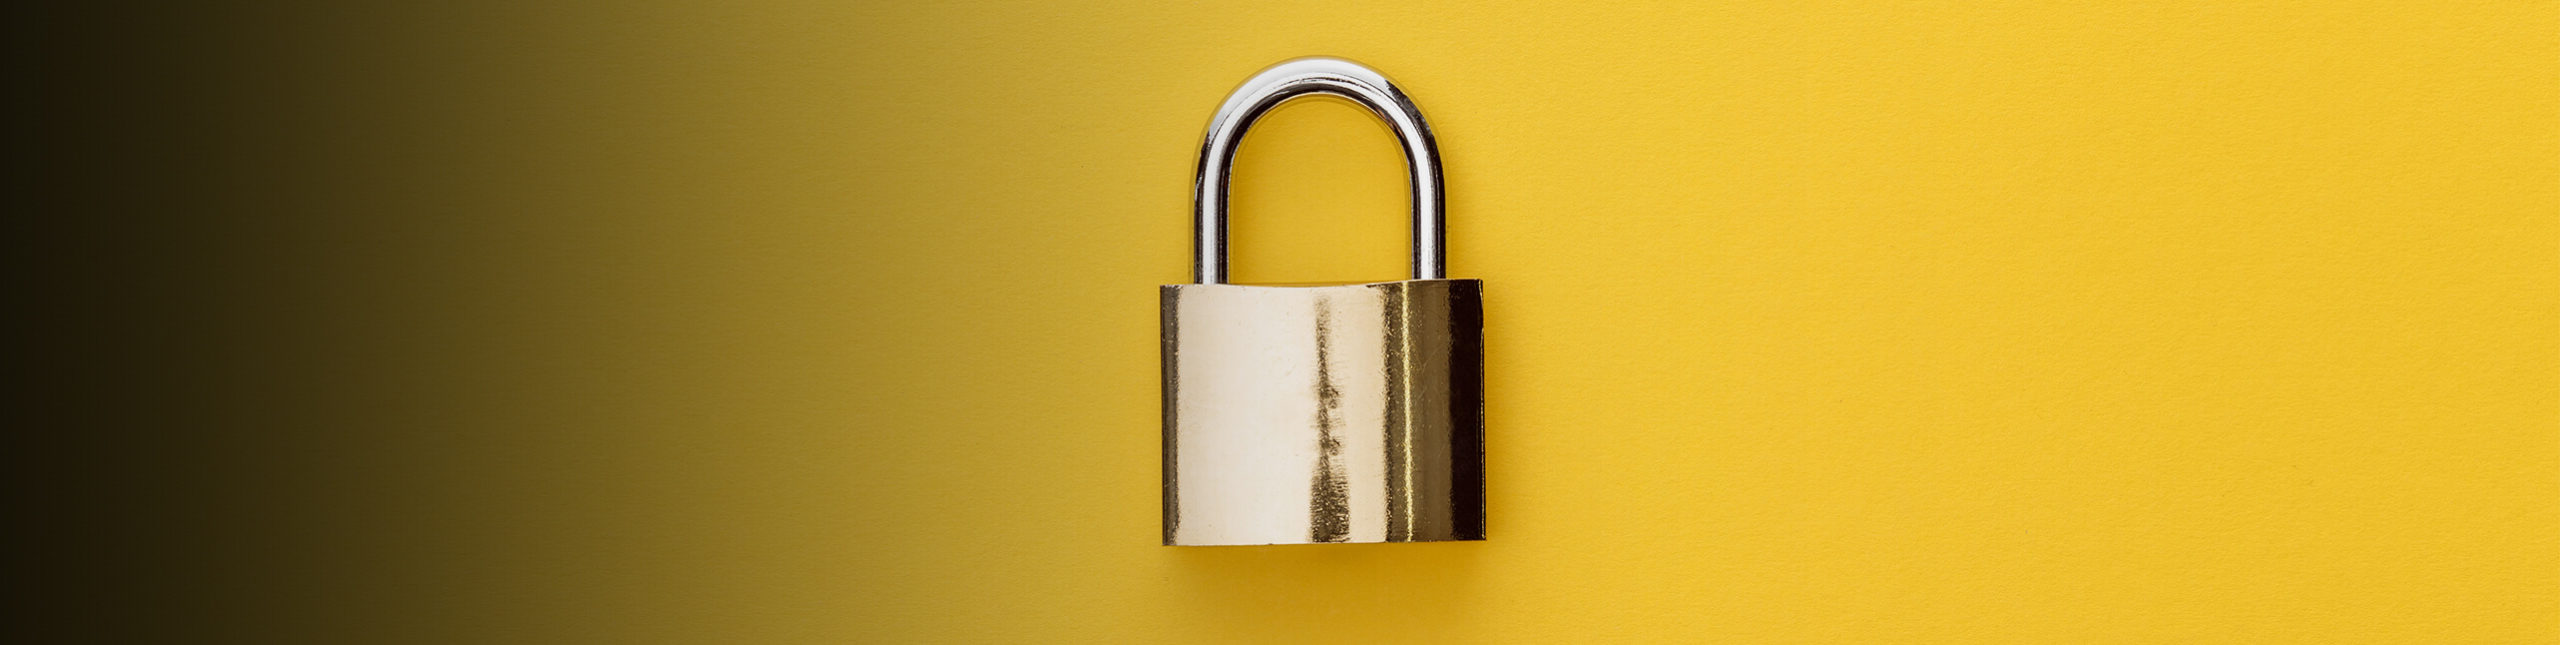 An image of a padlock and key.